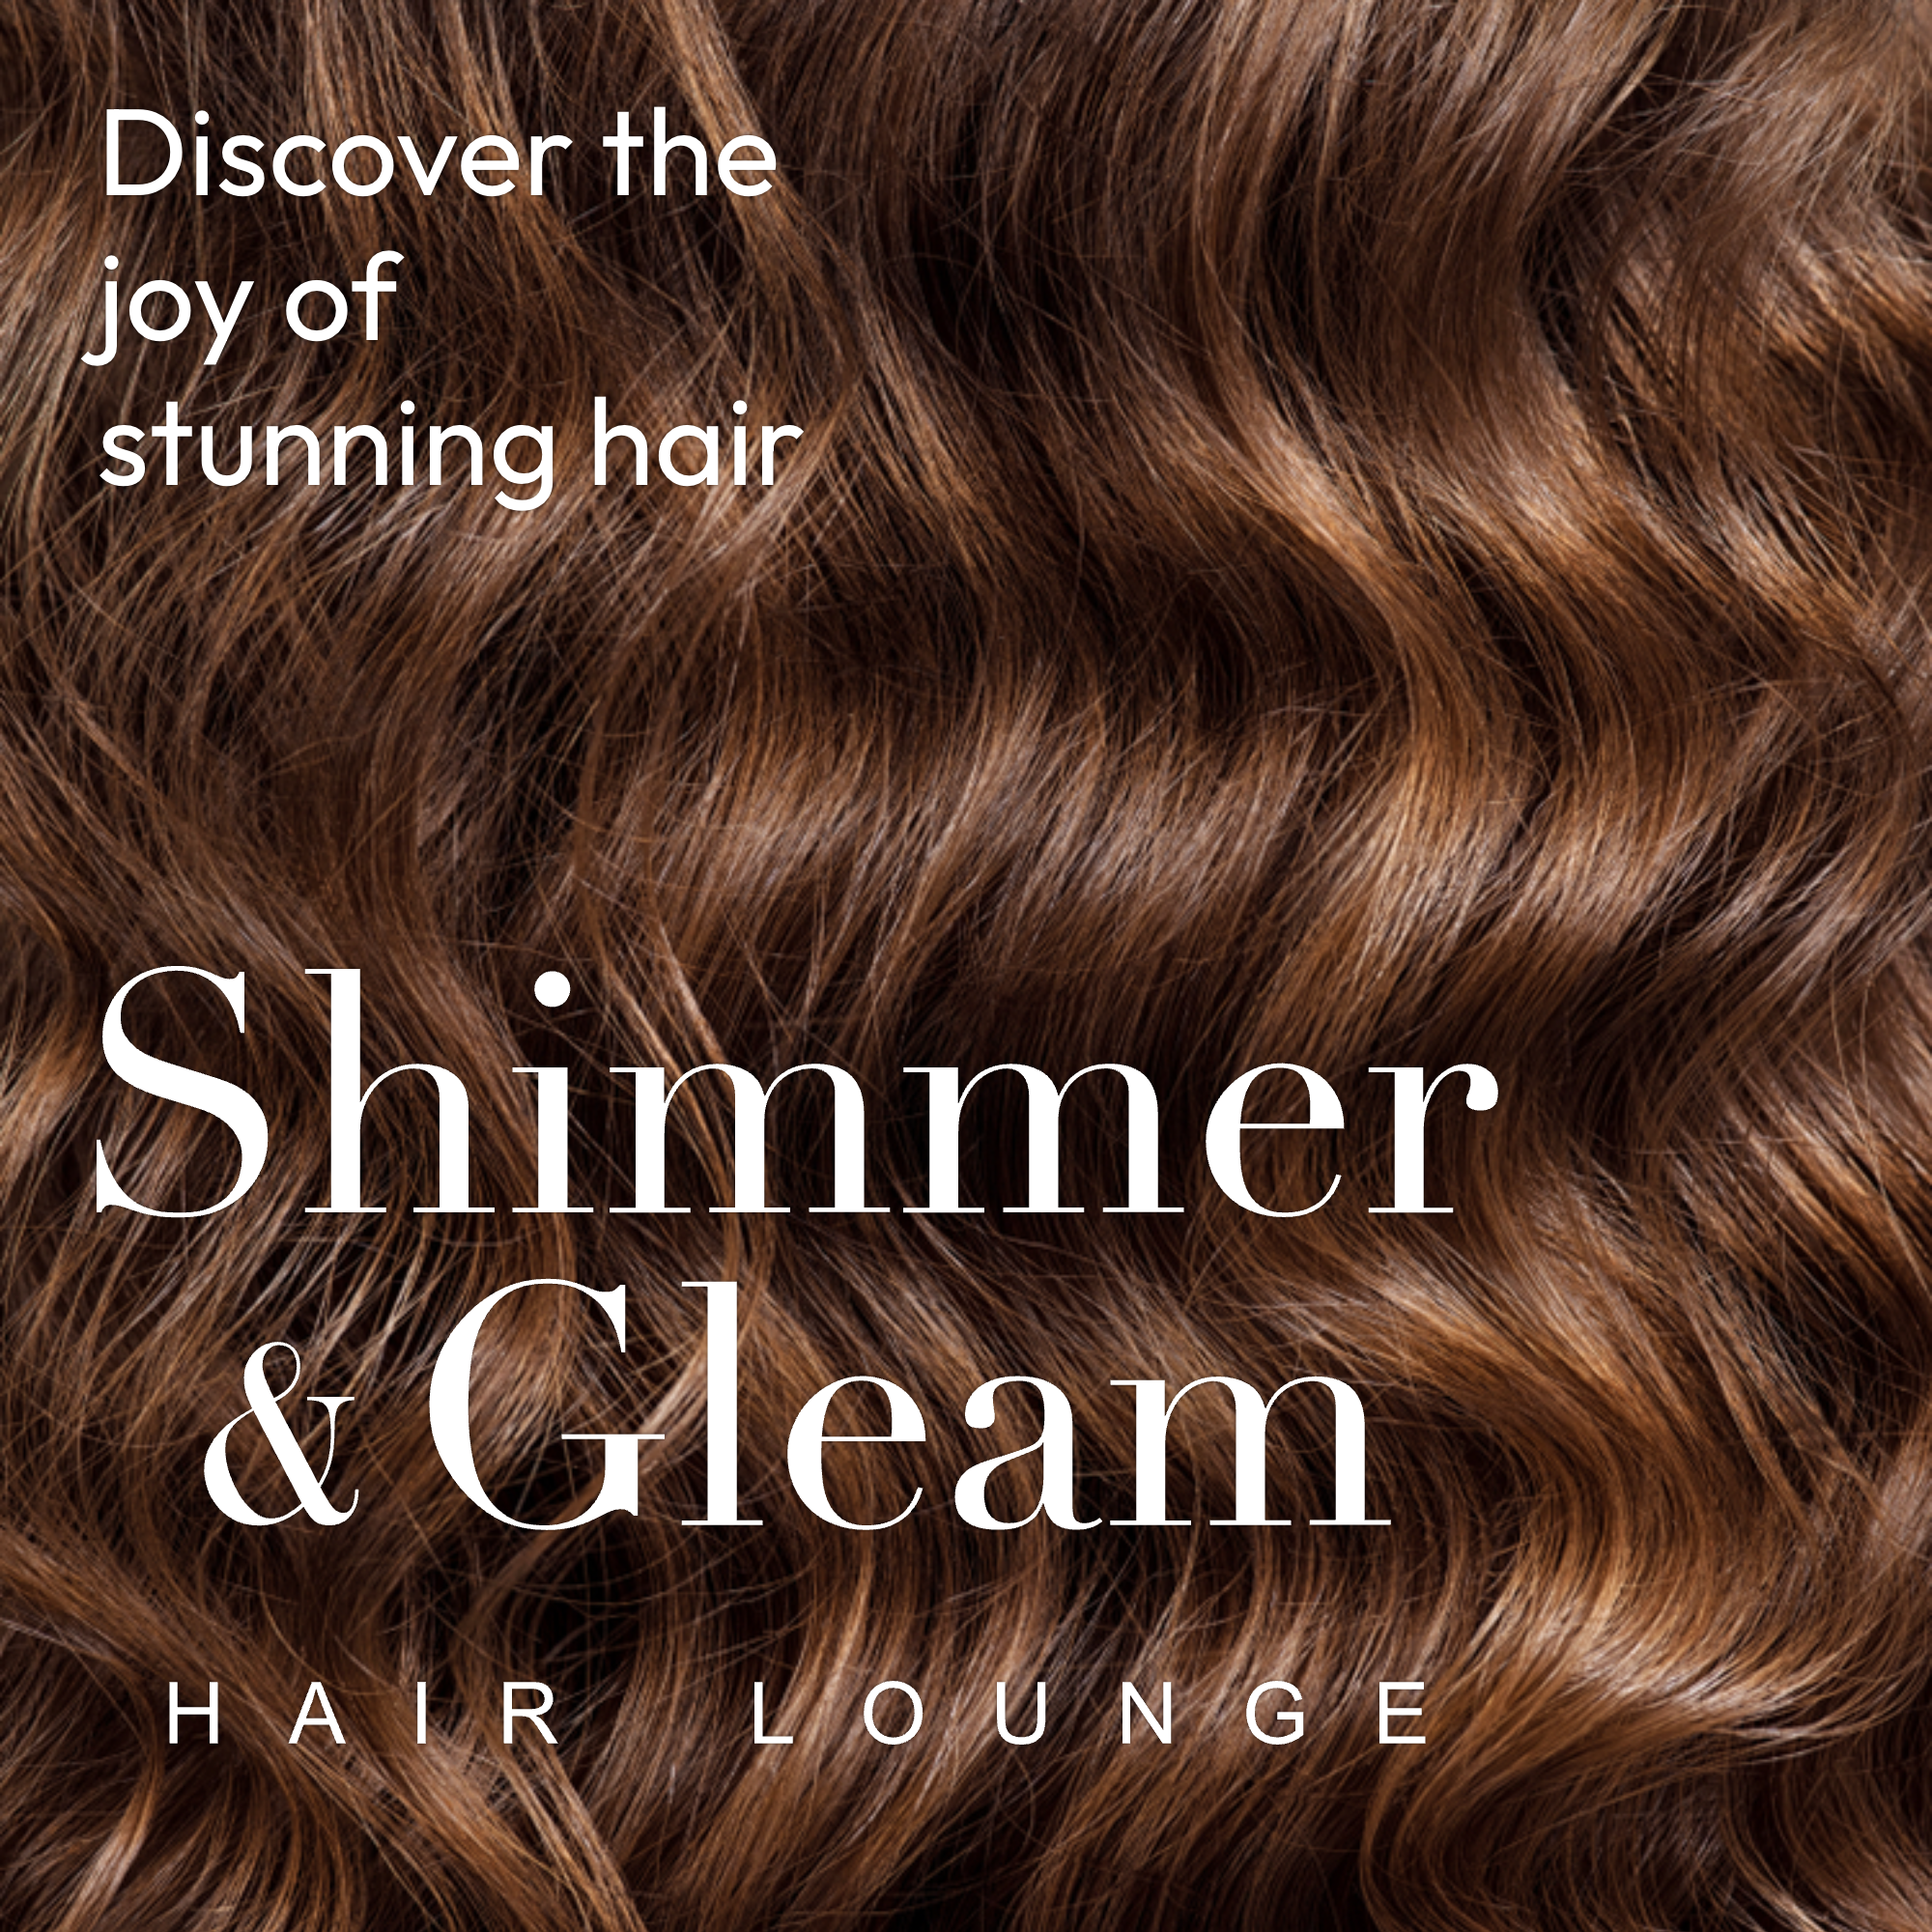 An awareness ad for a hairdresser